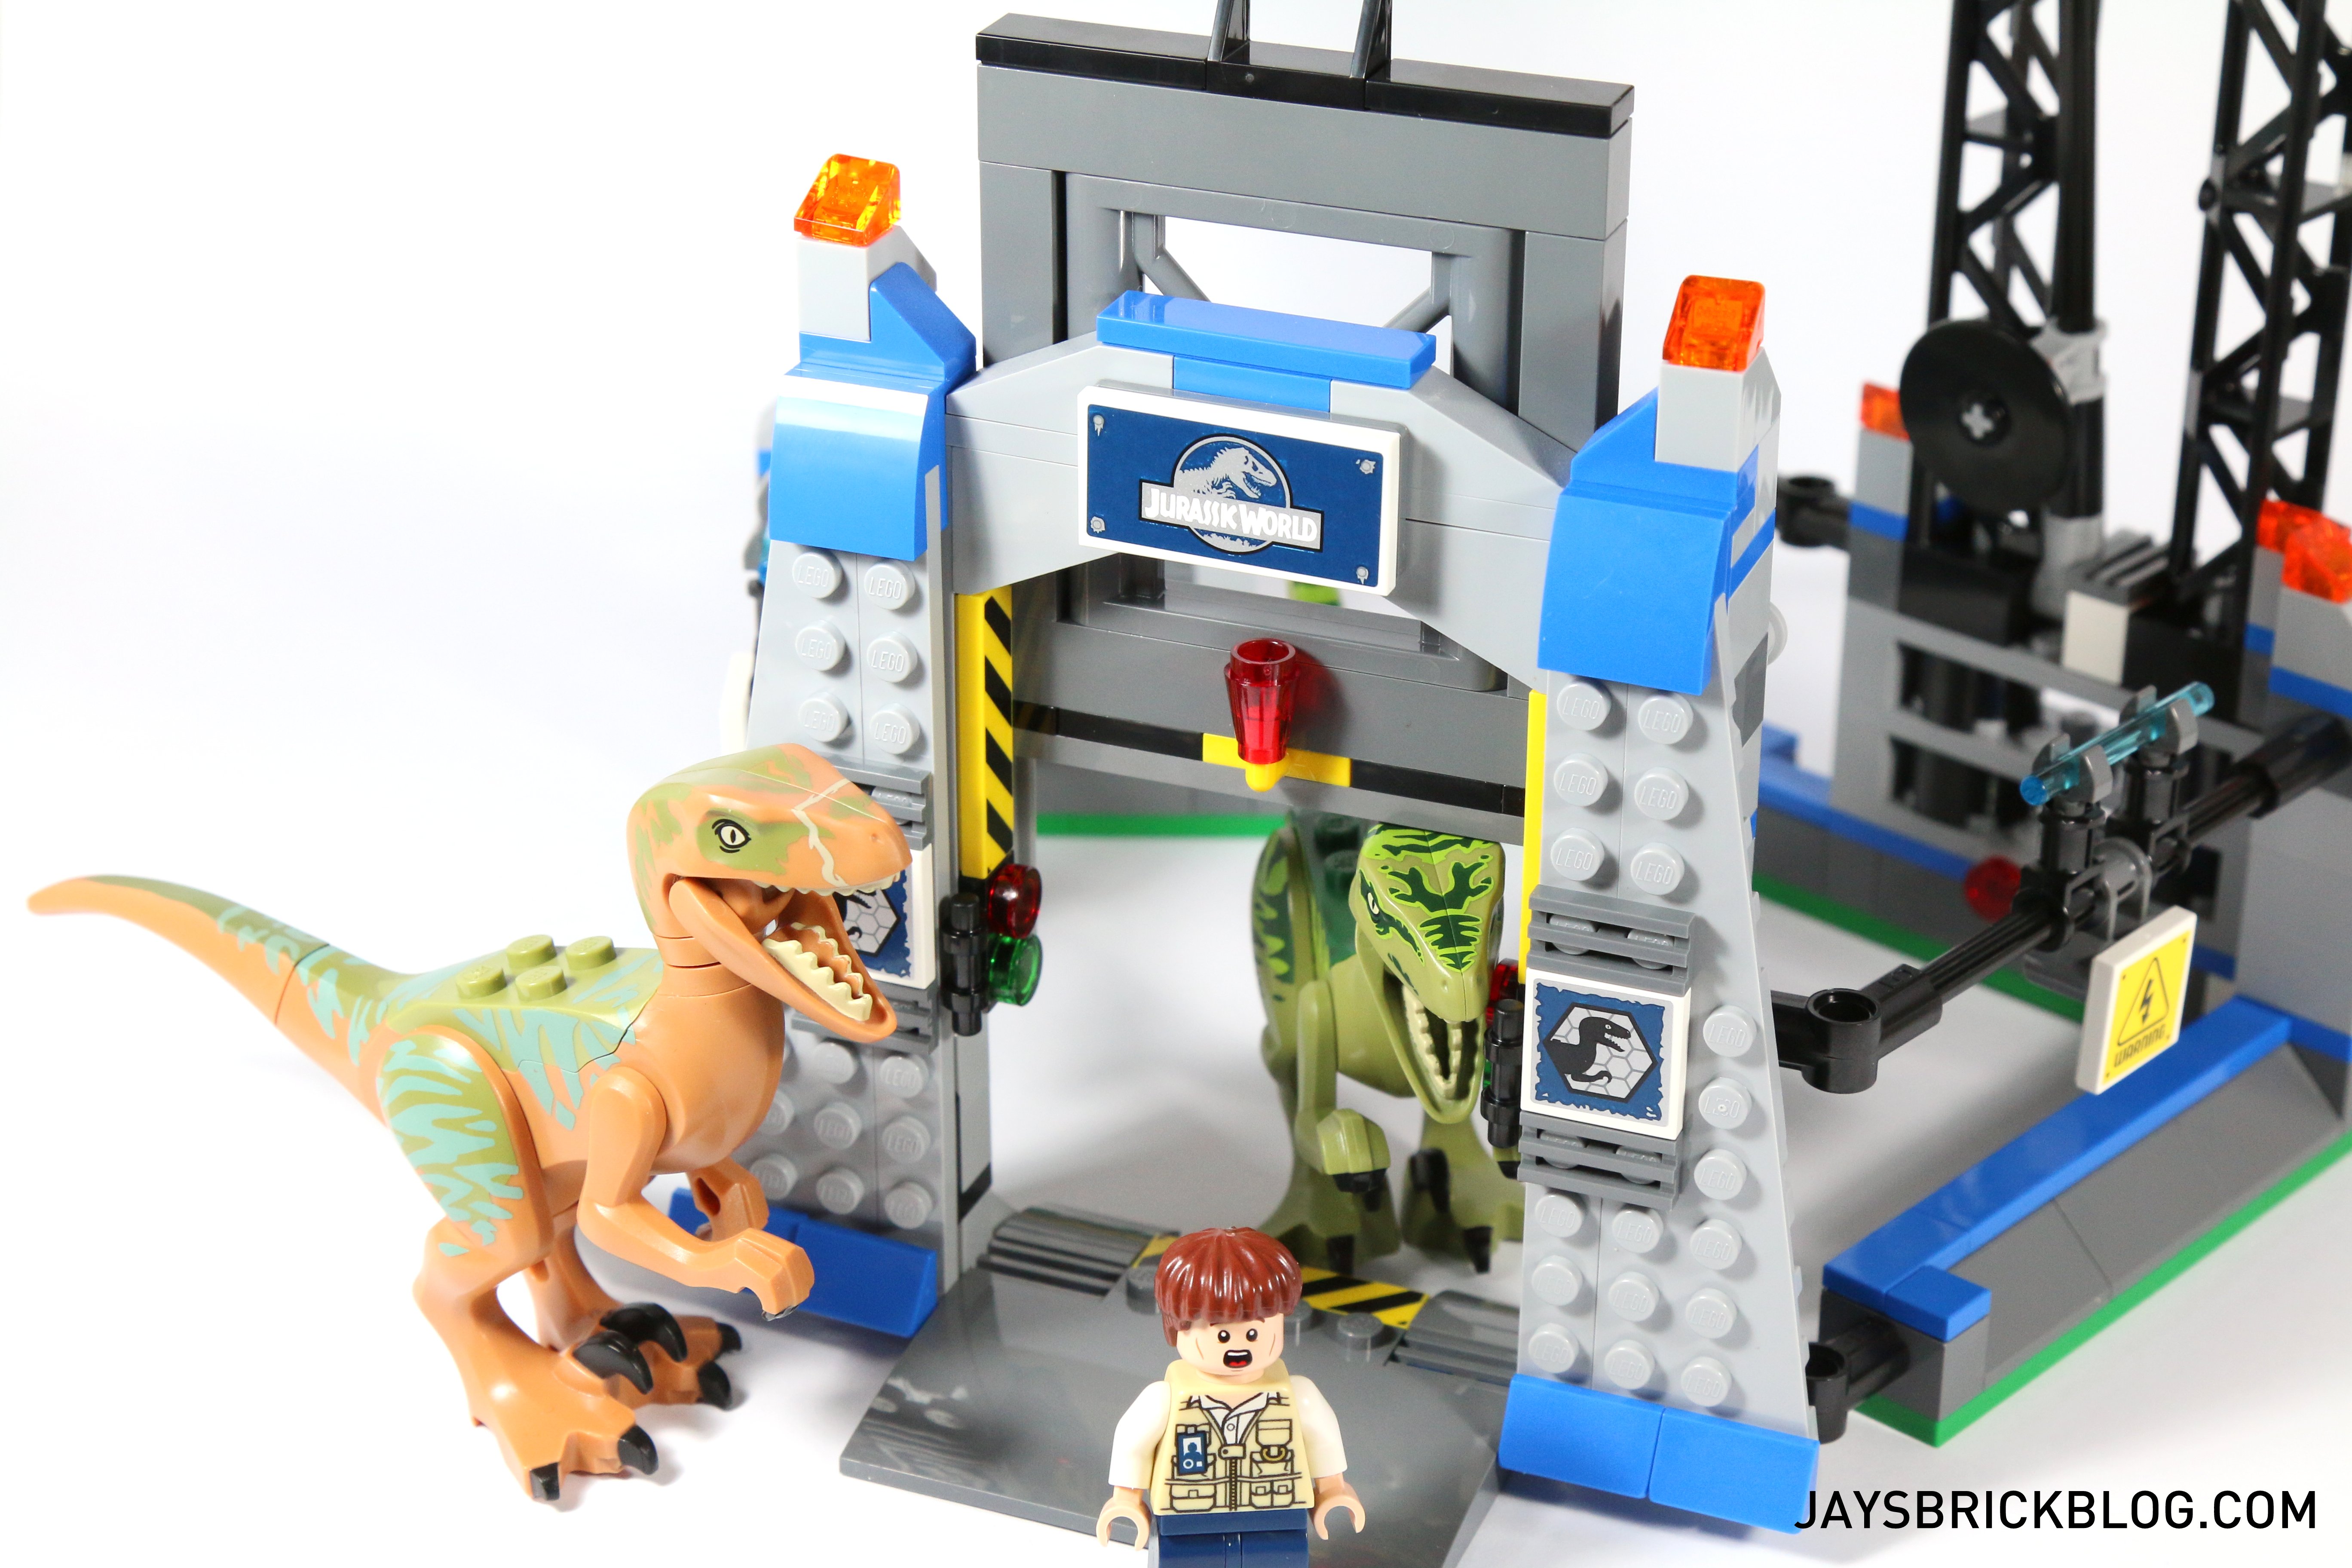 LEGO Jurassic Park Jurassic World Raptor Escape Set #75920